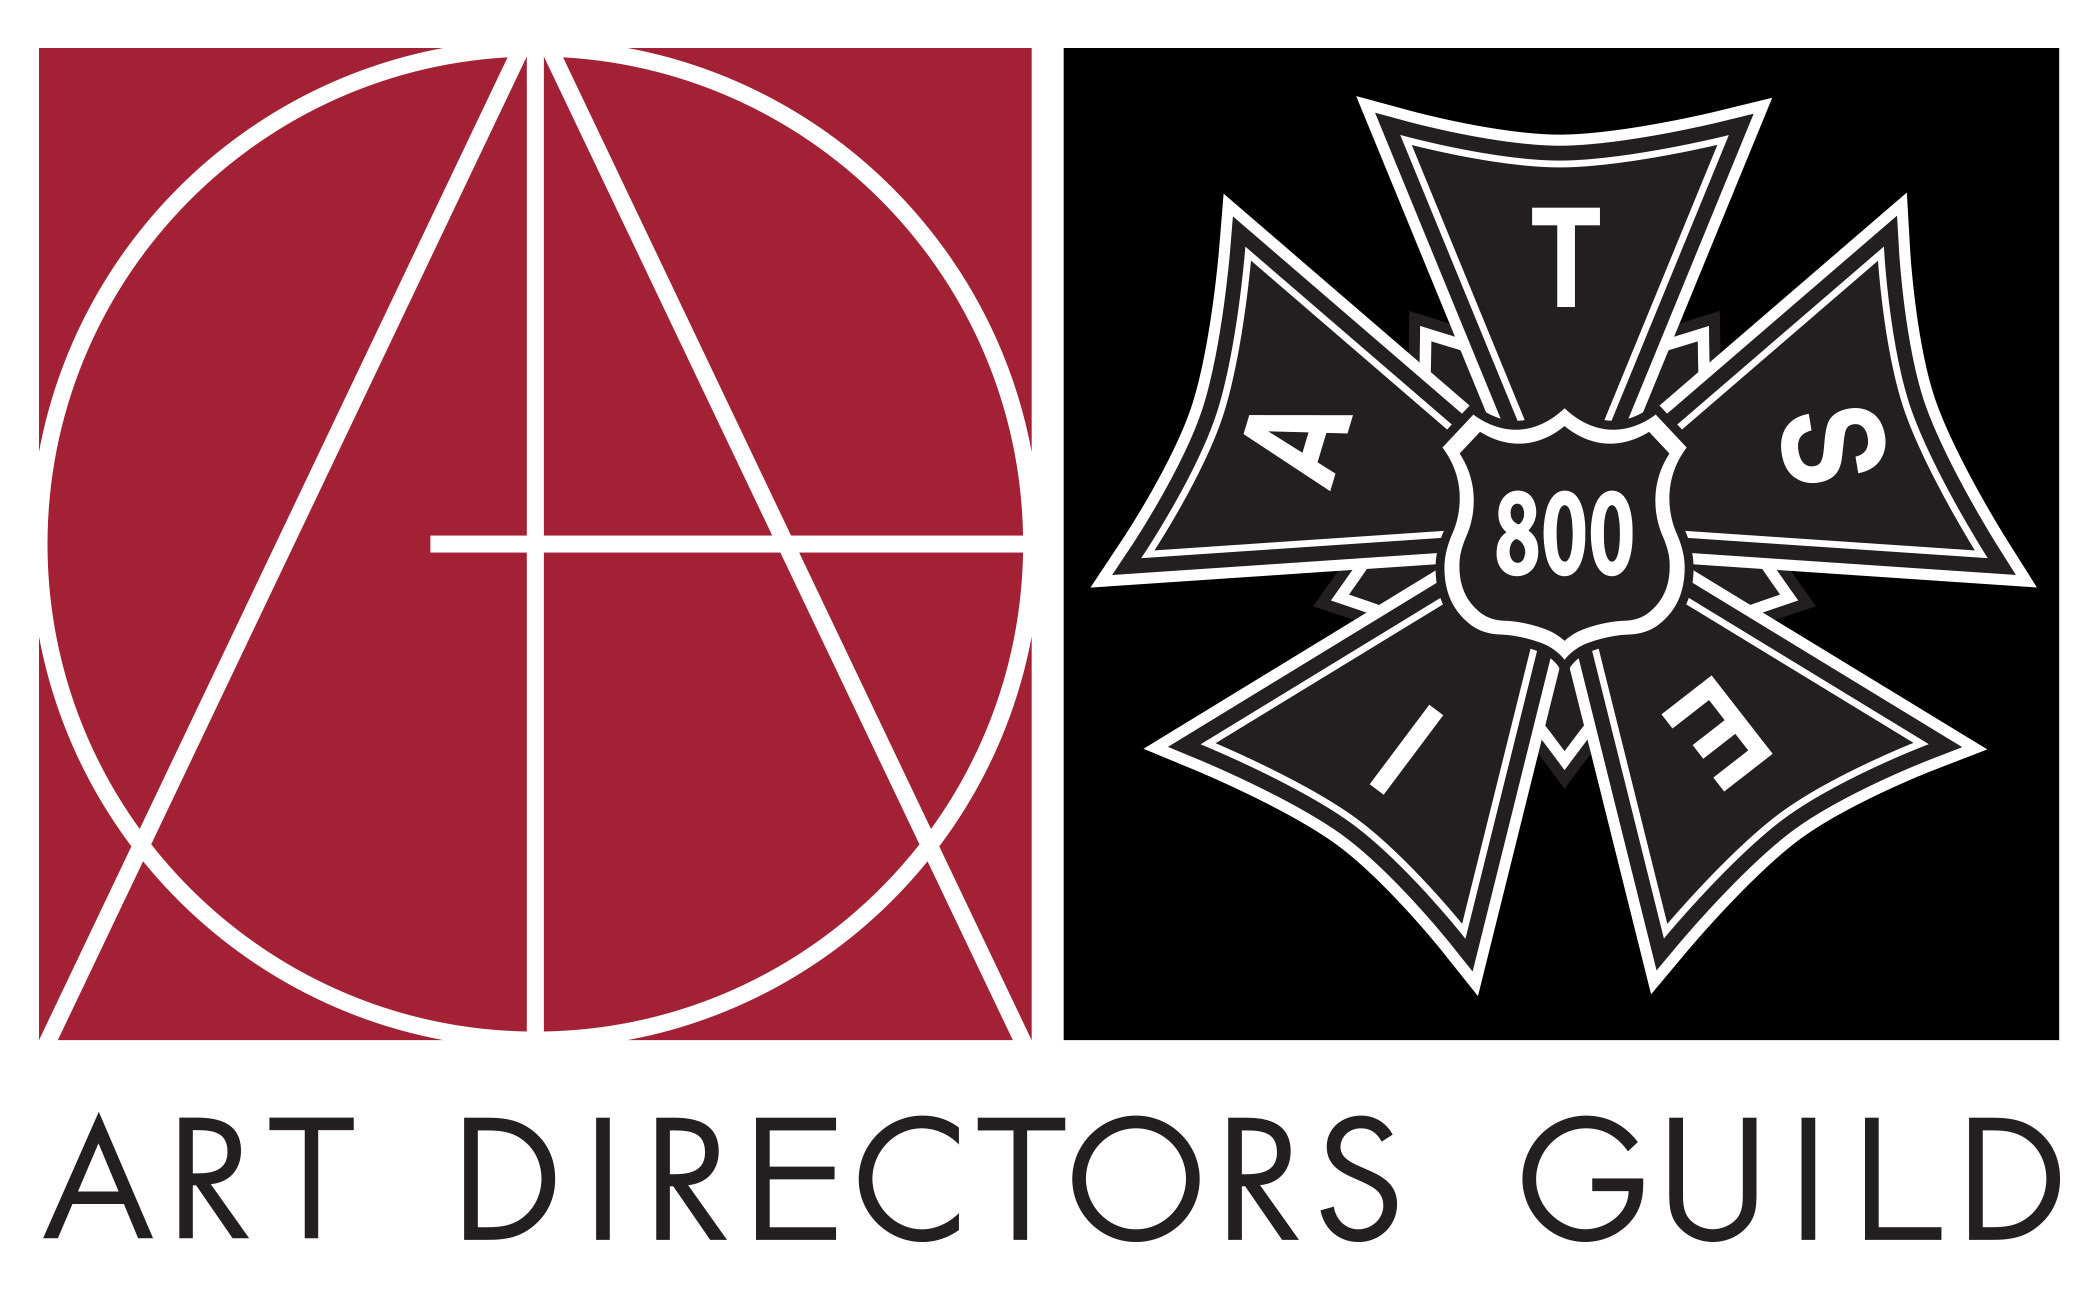 image of the Art Directors Guild logo